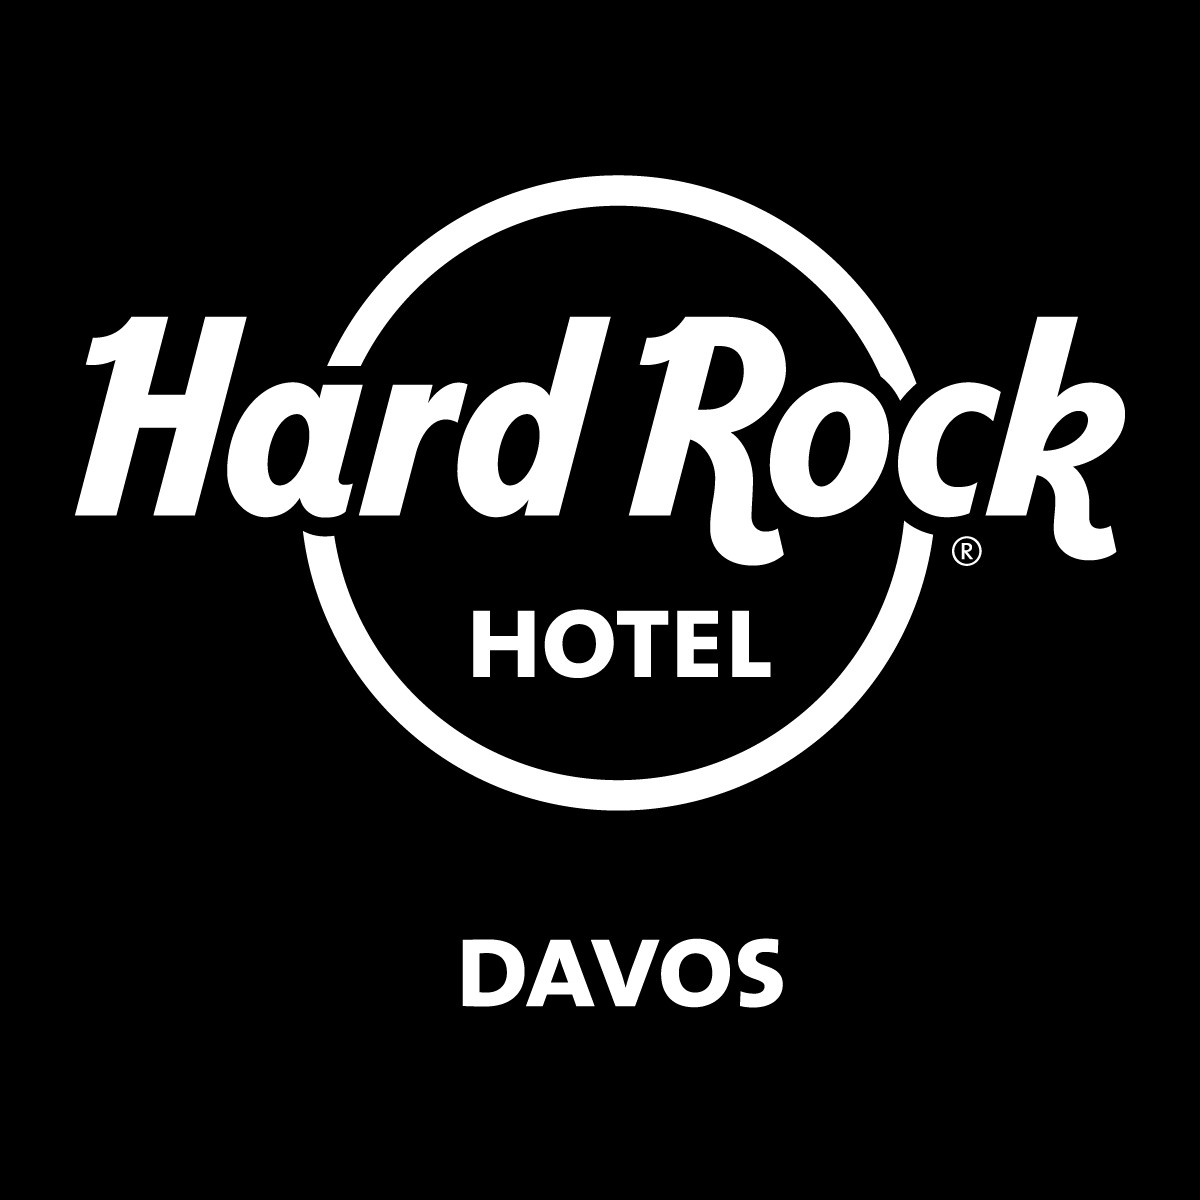 Hard Rock Hotel Davos 